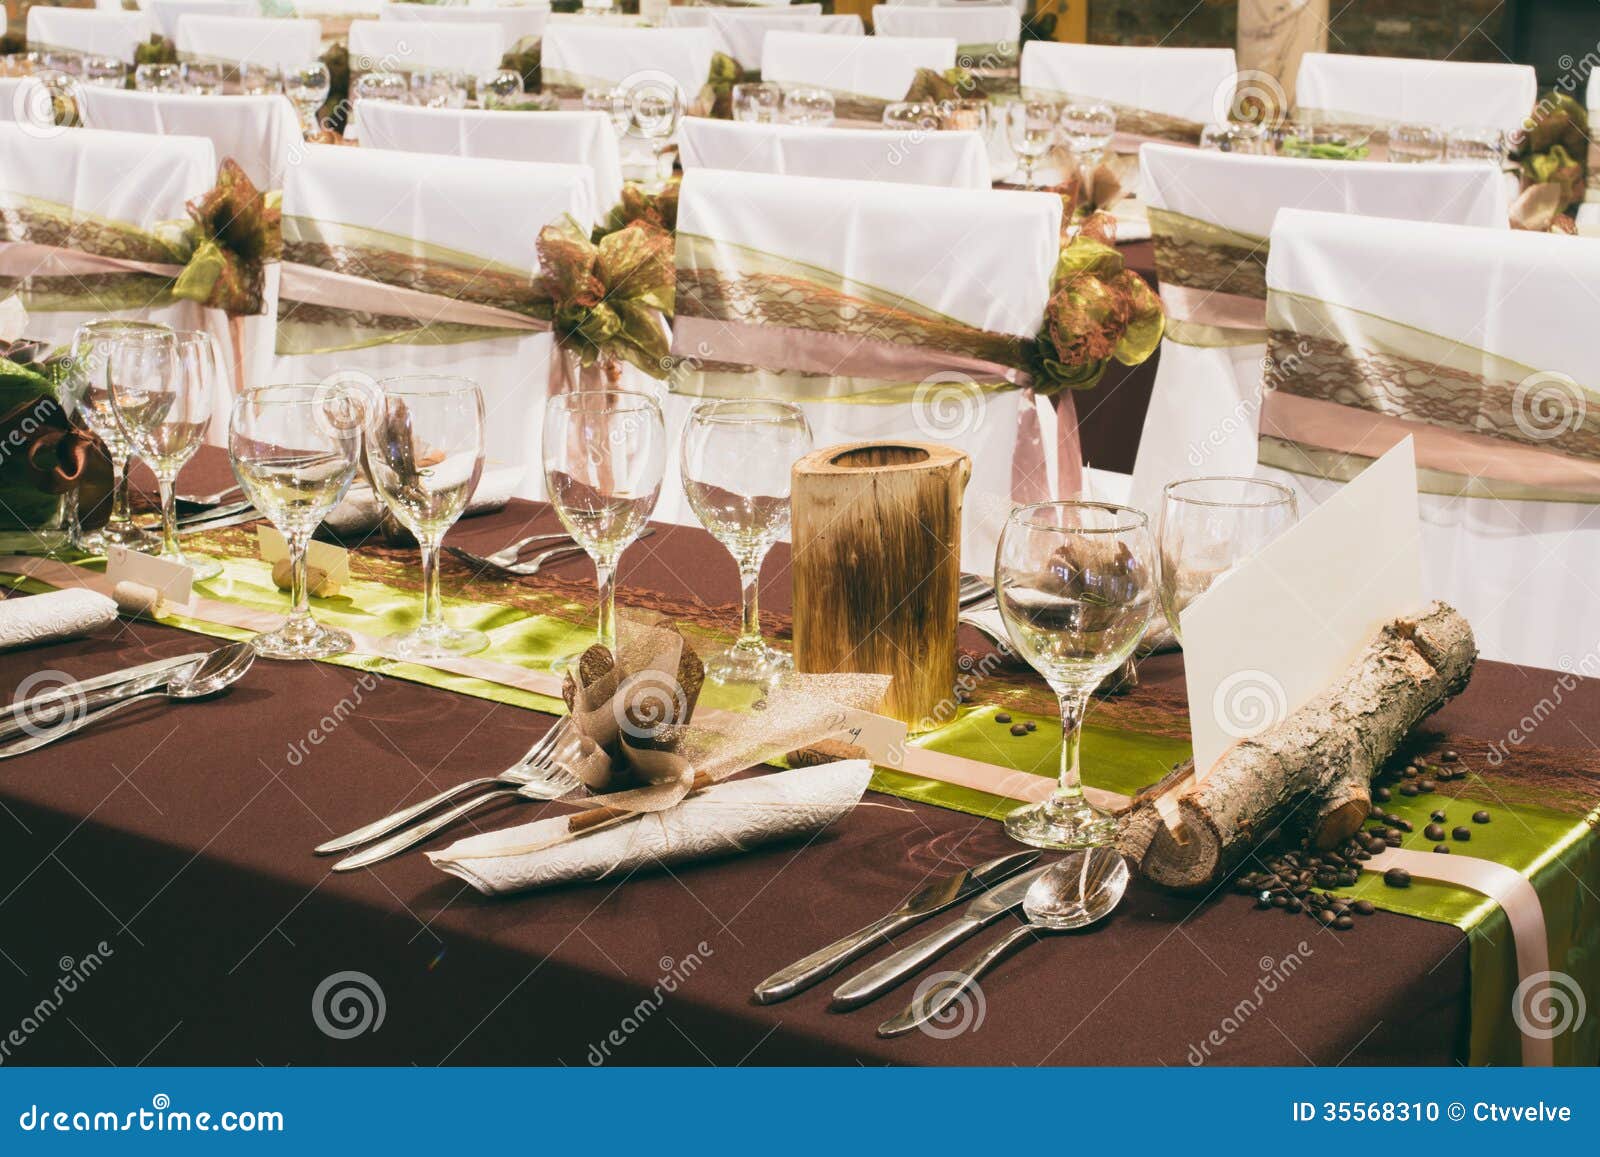 Unique Wedding Table Decorations Stock Photo  Image: 35568310